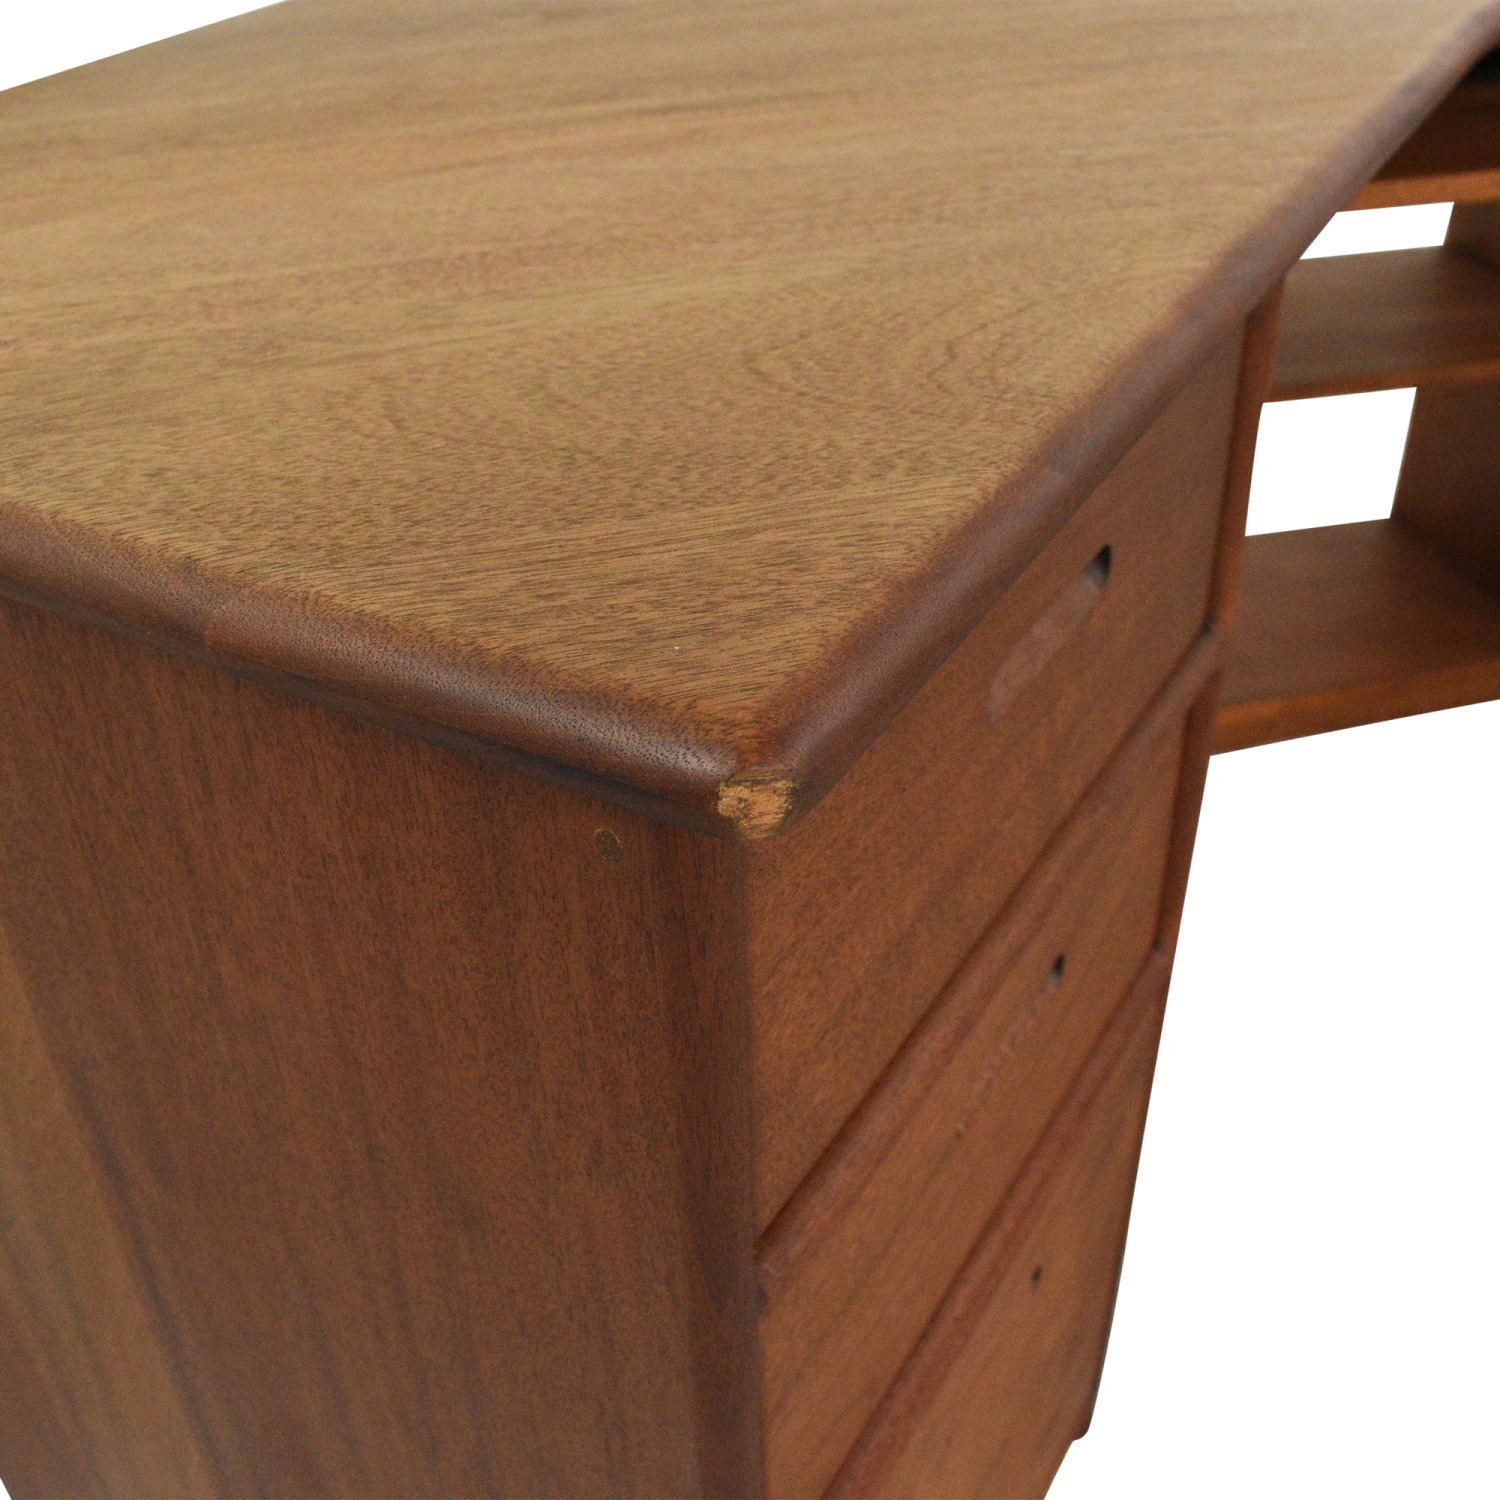 https://res.cloudinary.com/dkqtxtobb/image/upload/f_auto,q_auto:best,w_1500/product-assets/275657/hardwood-artisans/tables/home-office-desks/buy-hardwood-artisans-contemporary-corner-desk.jpeg